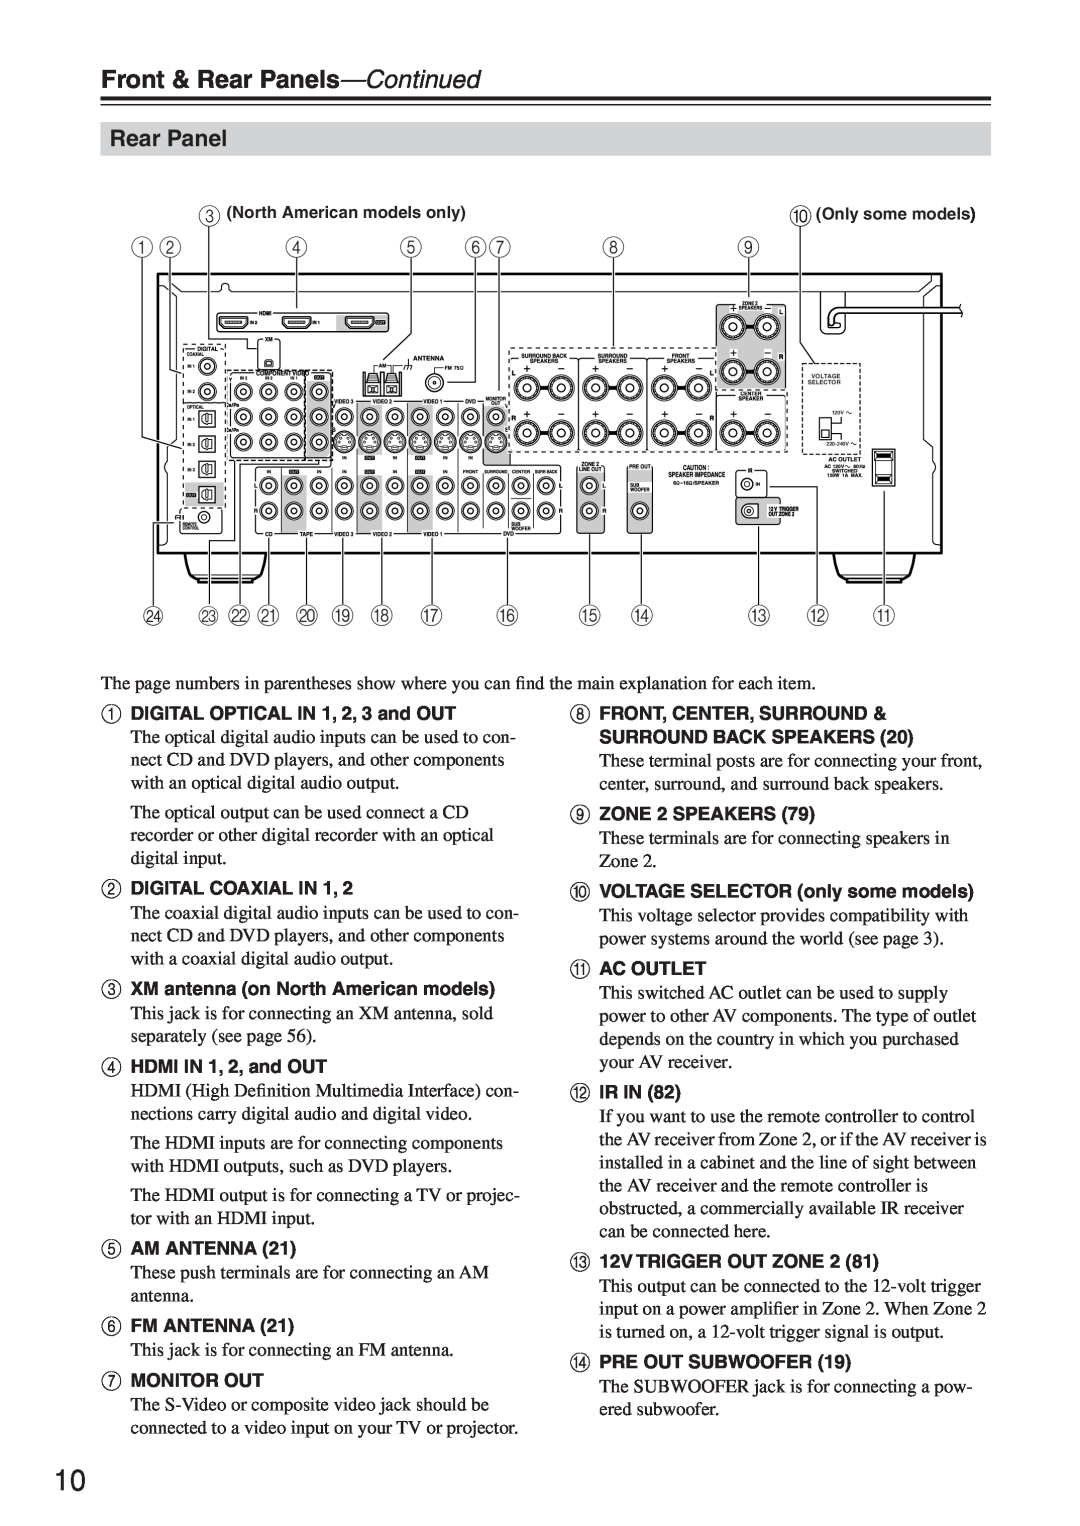 Onkyo TX-SR604/604E, TX-SR674/674E instruction manual N M V U T S R Q P O N, M L K, Front & Rear Panels—Continued 